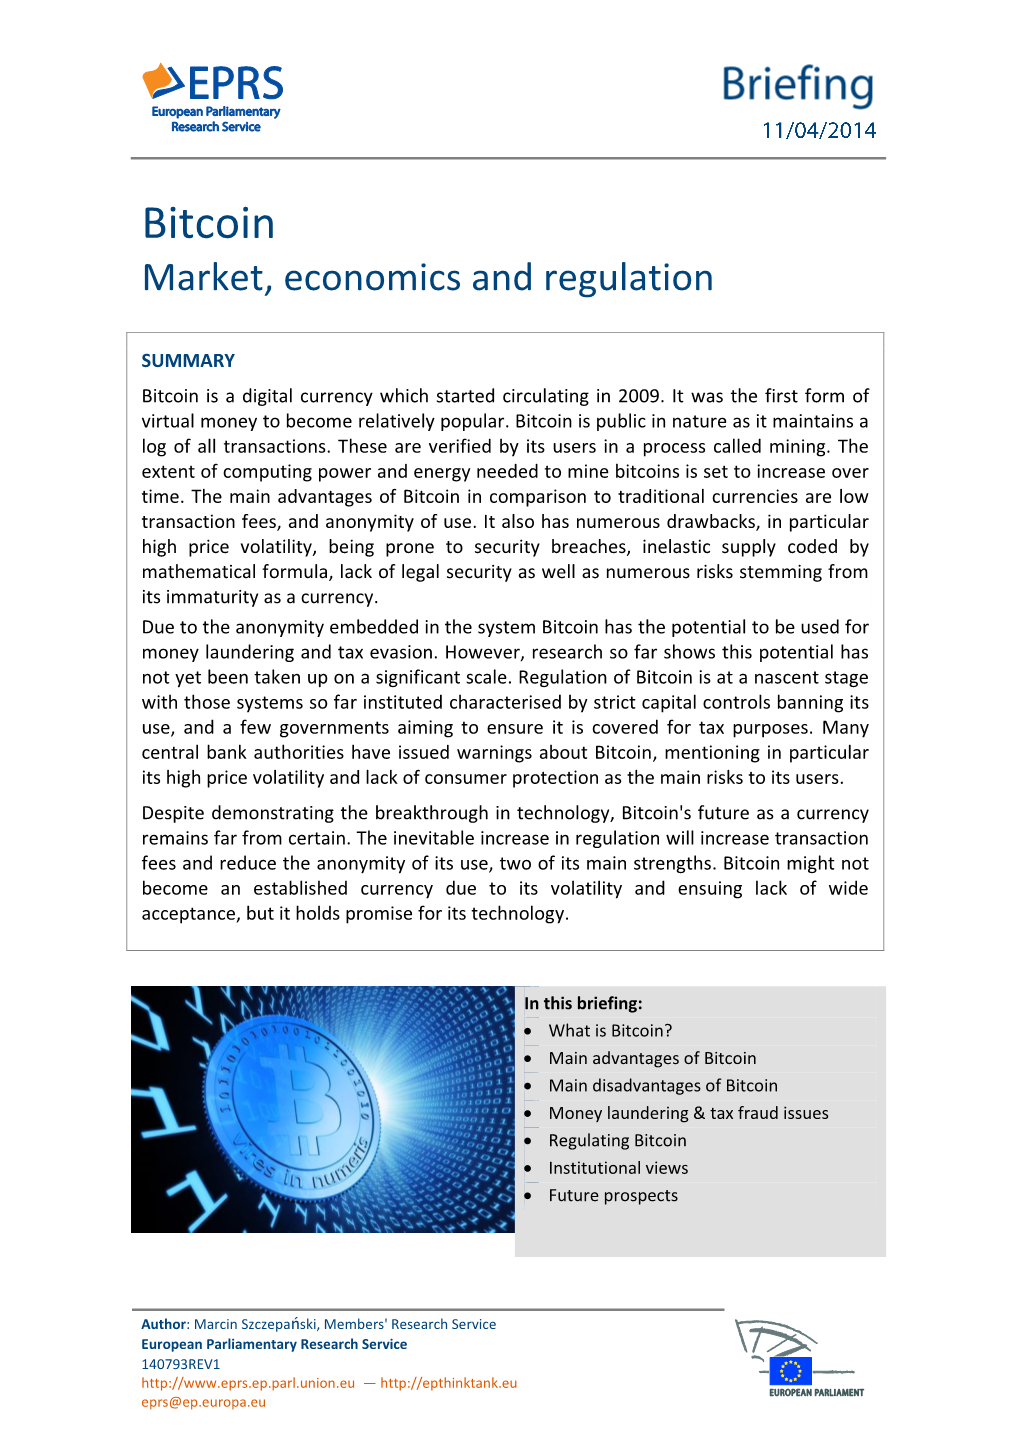 Bitcoin Market, Economics and Regulation